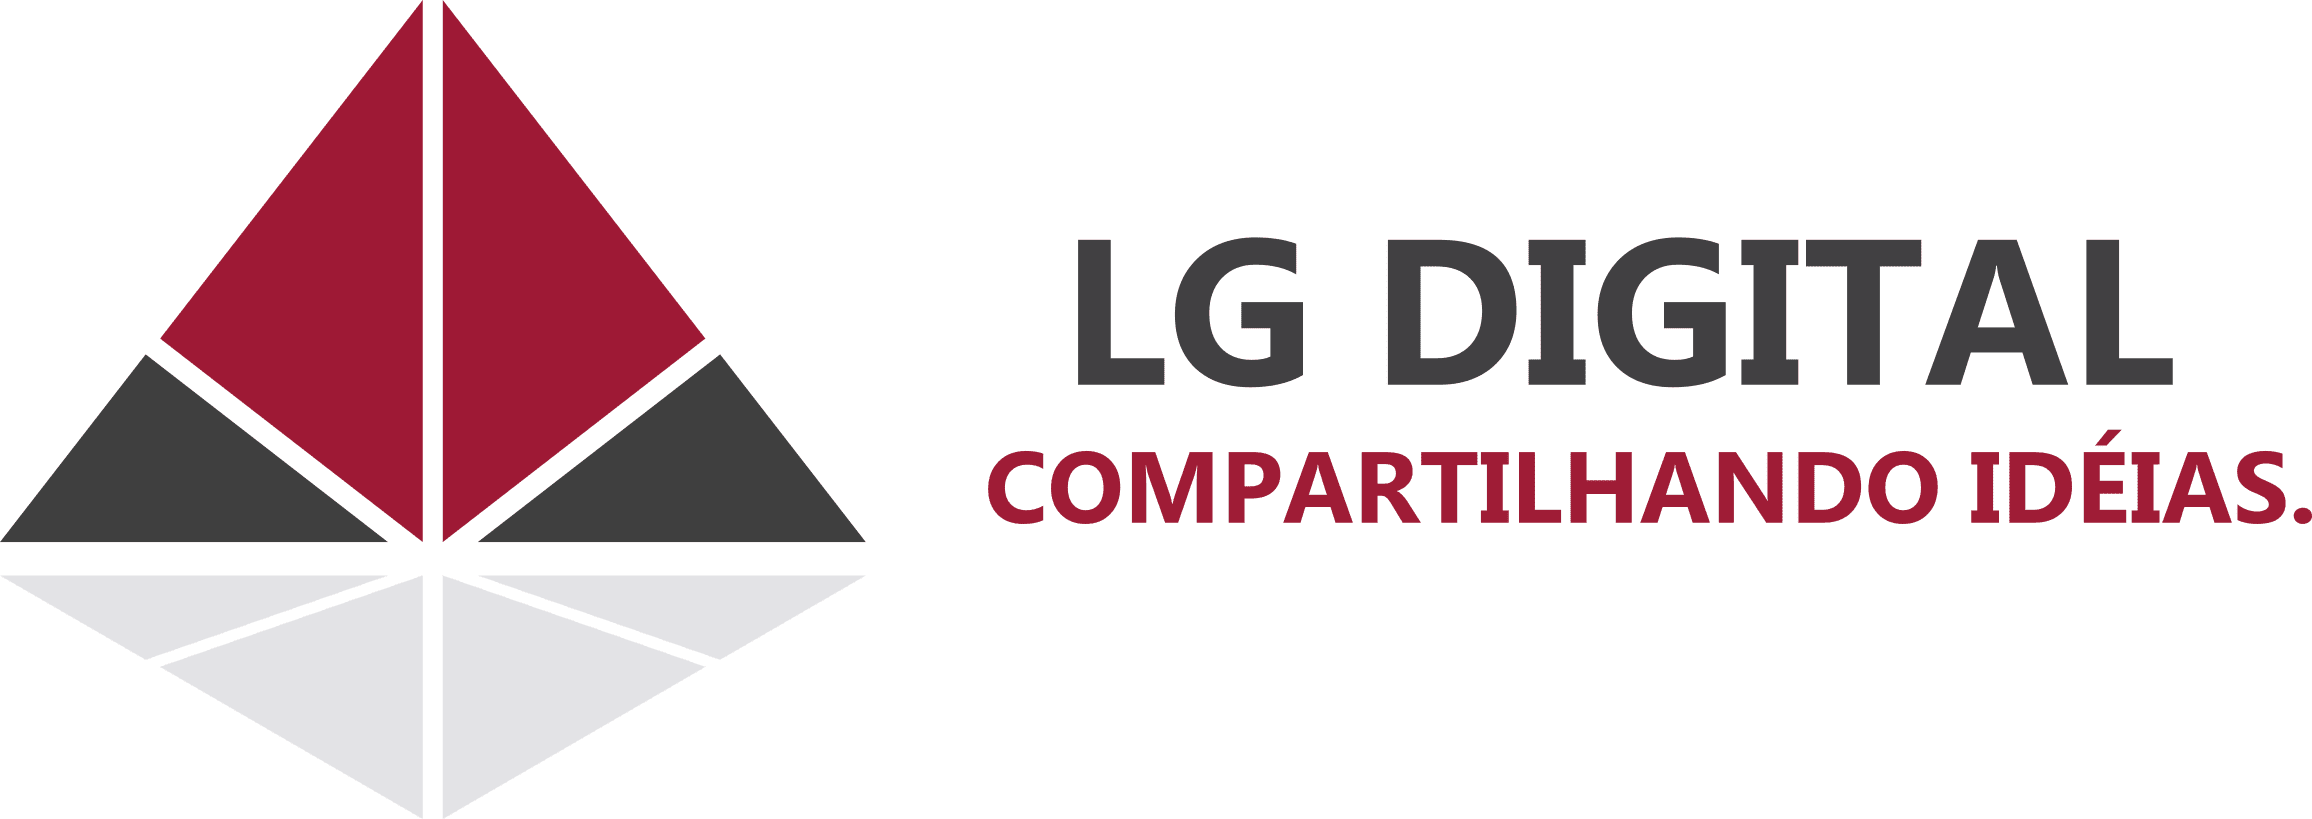 LG DIGITAL